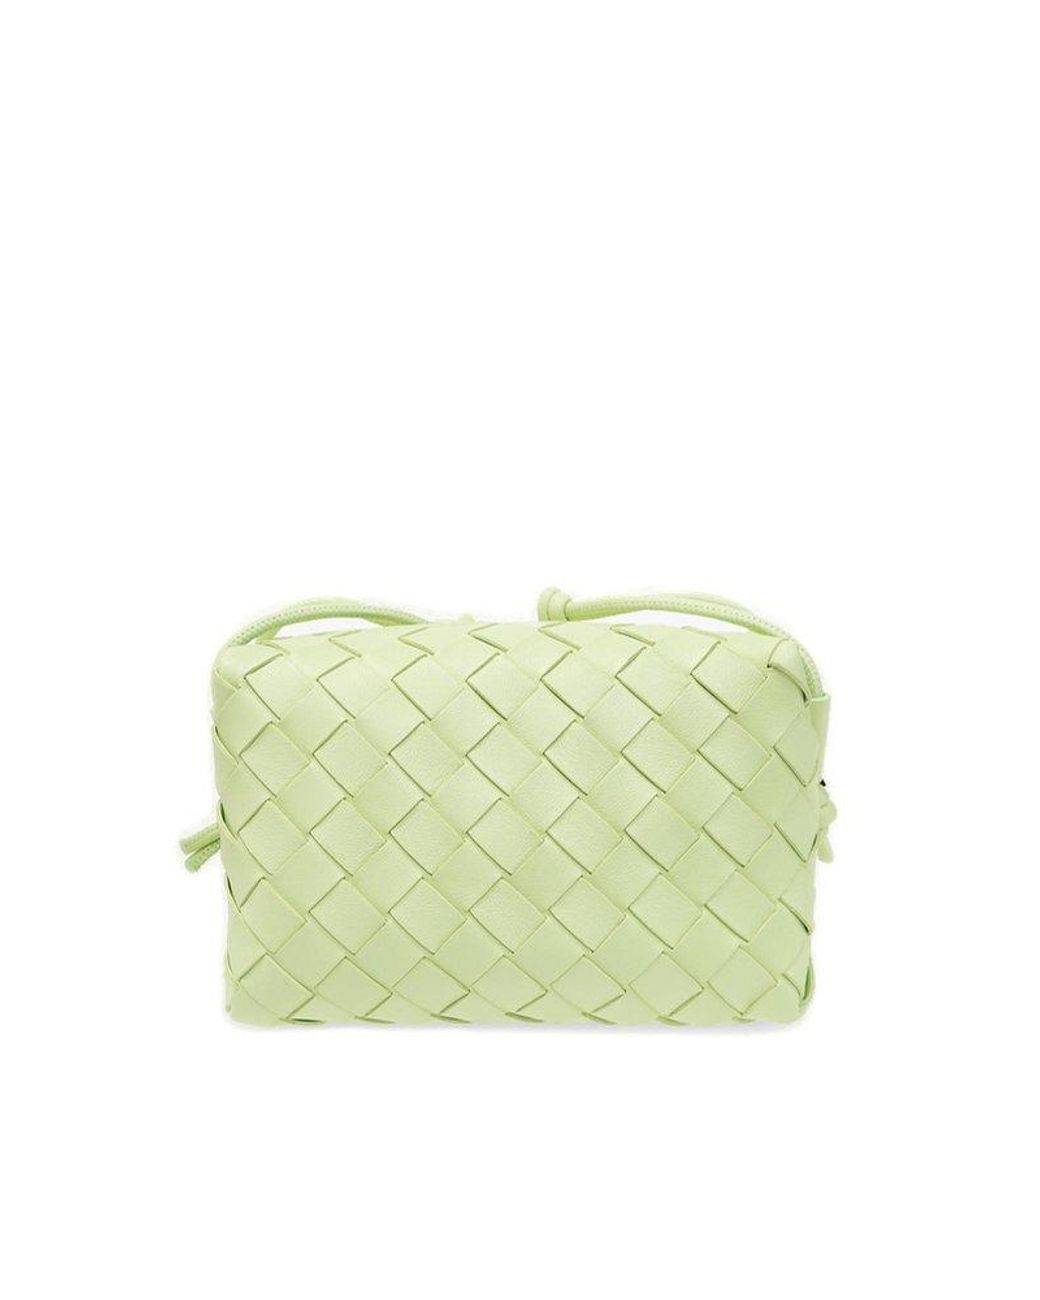 Bottega Veneta® Mini Loop Camera Bag in Dark Green. Shop online now.